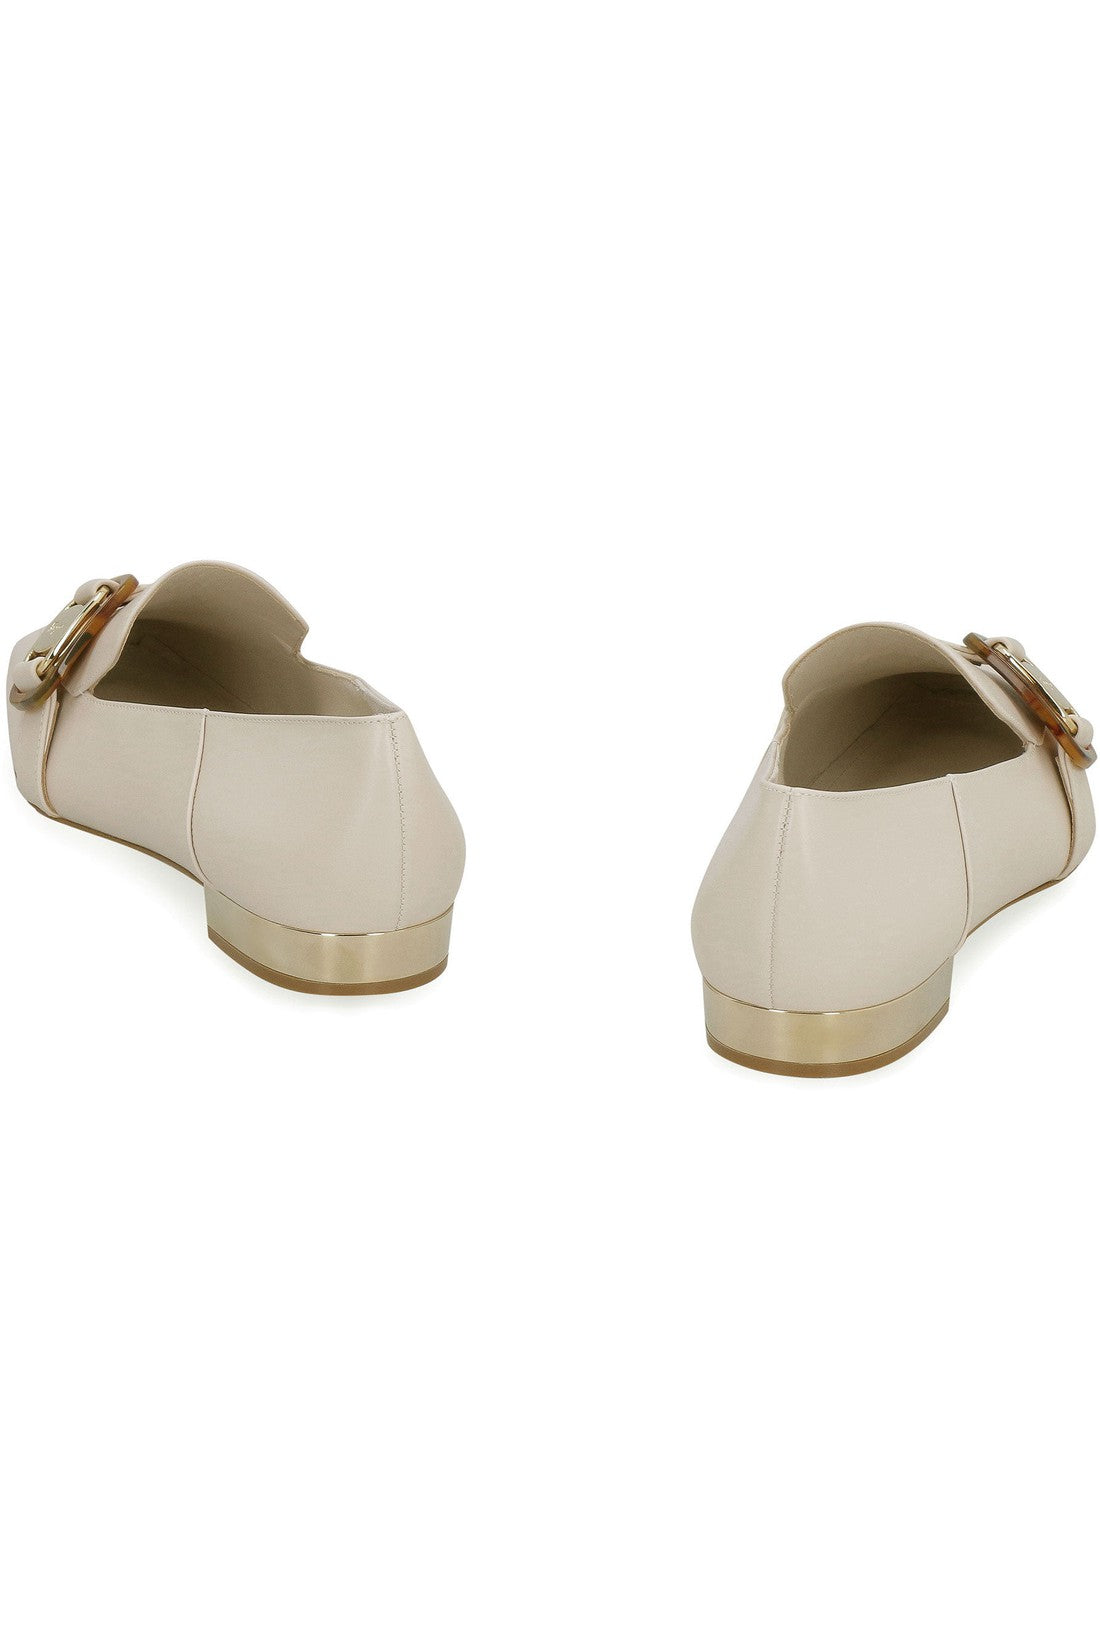 FERRAGAMO-OUTLET-SALE-Wang leather loafers-ARCHIVIST